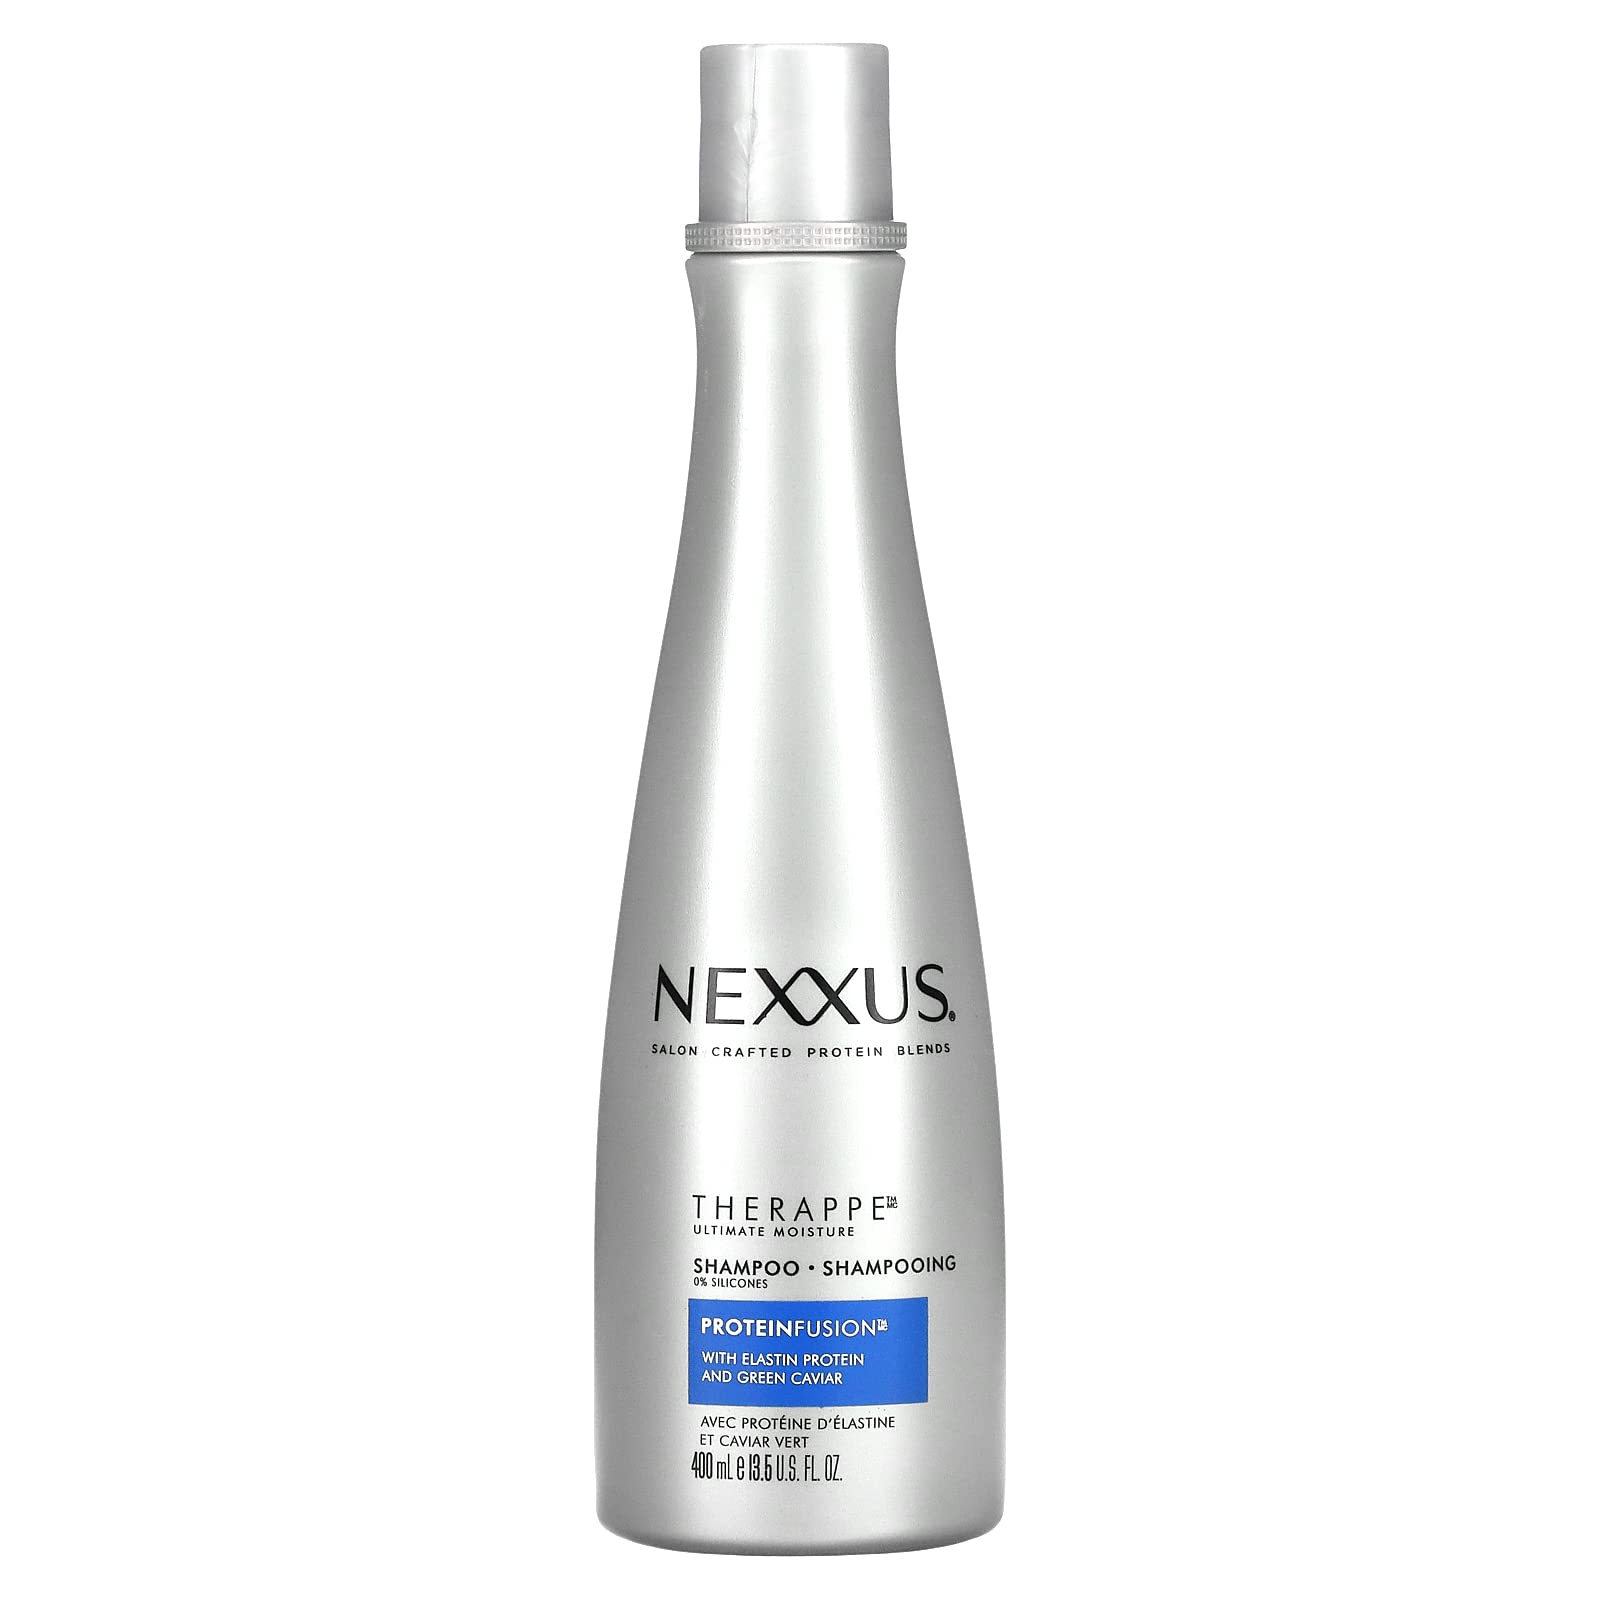 NEXXUS THERAPPE Caviar Complex Ultimate Moisture, Step 1, Shampoo 13.5 oz (3 Pack)